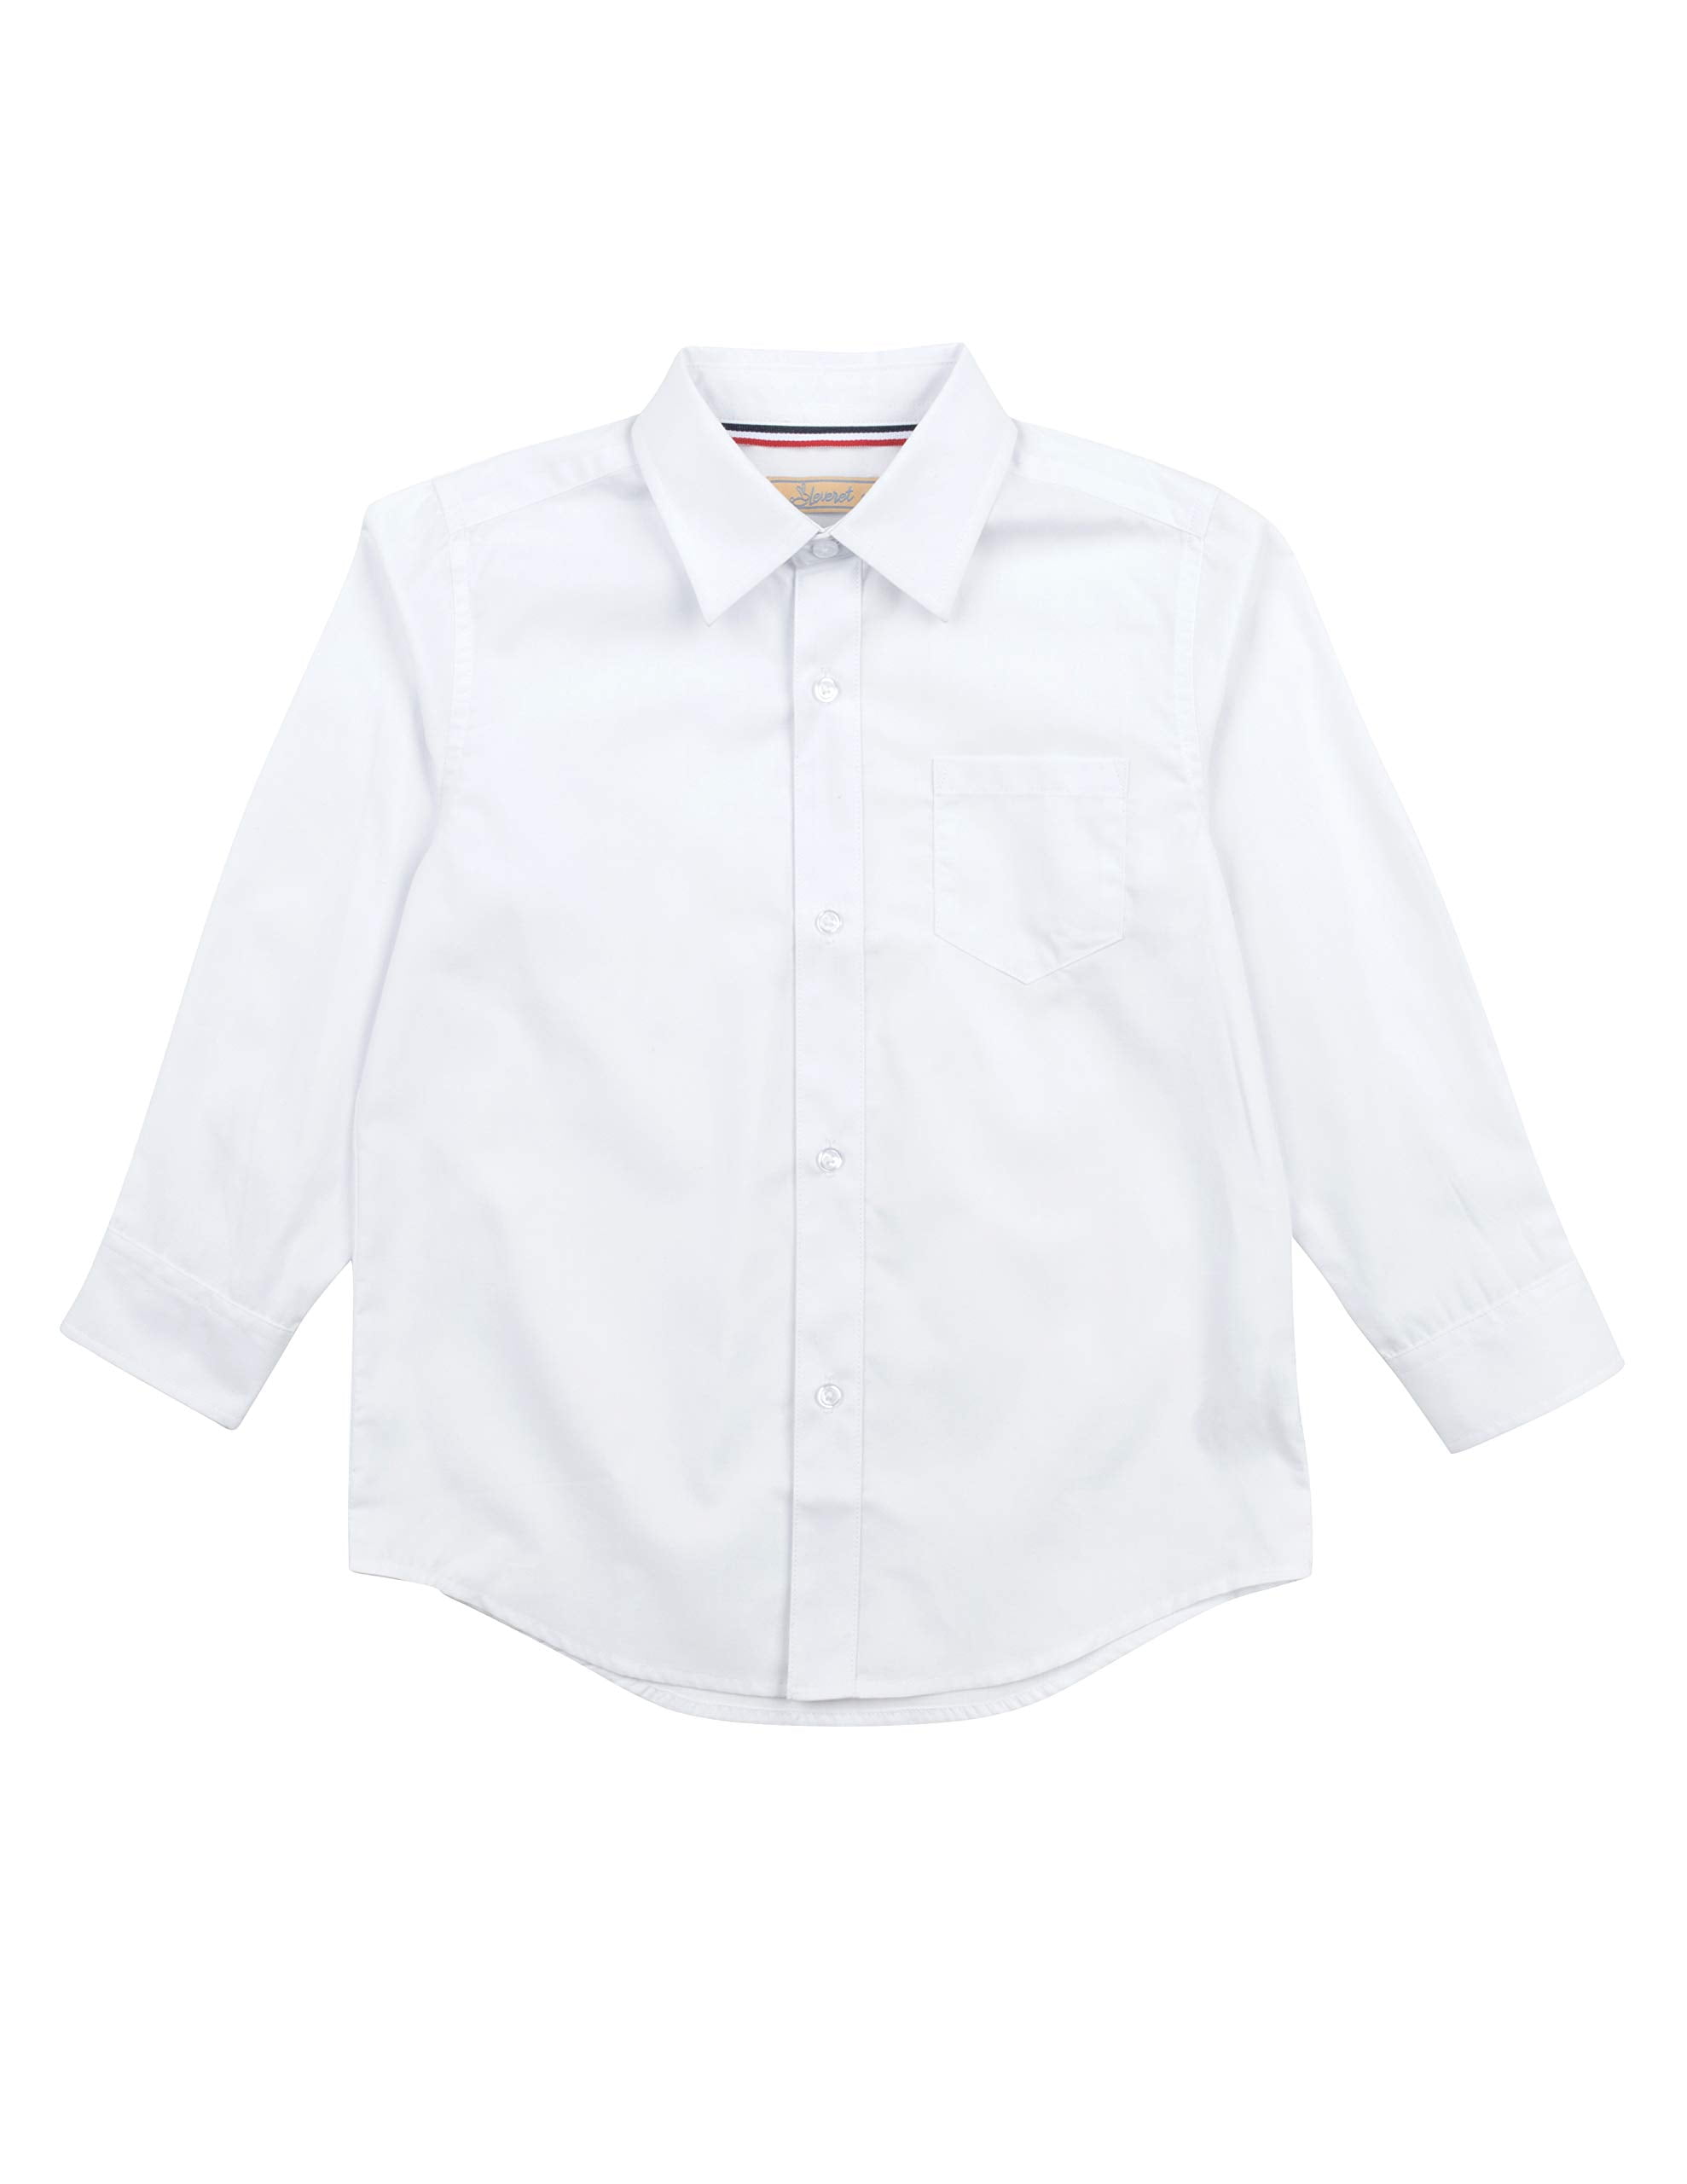 2 X BOYS SHORT&LONG SLEEVE SHIRT White Cotton Mix School Uniform 